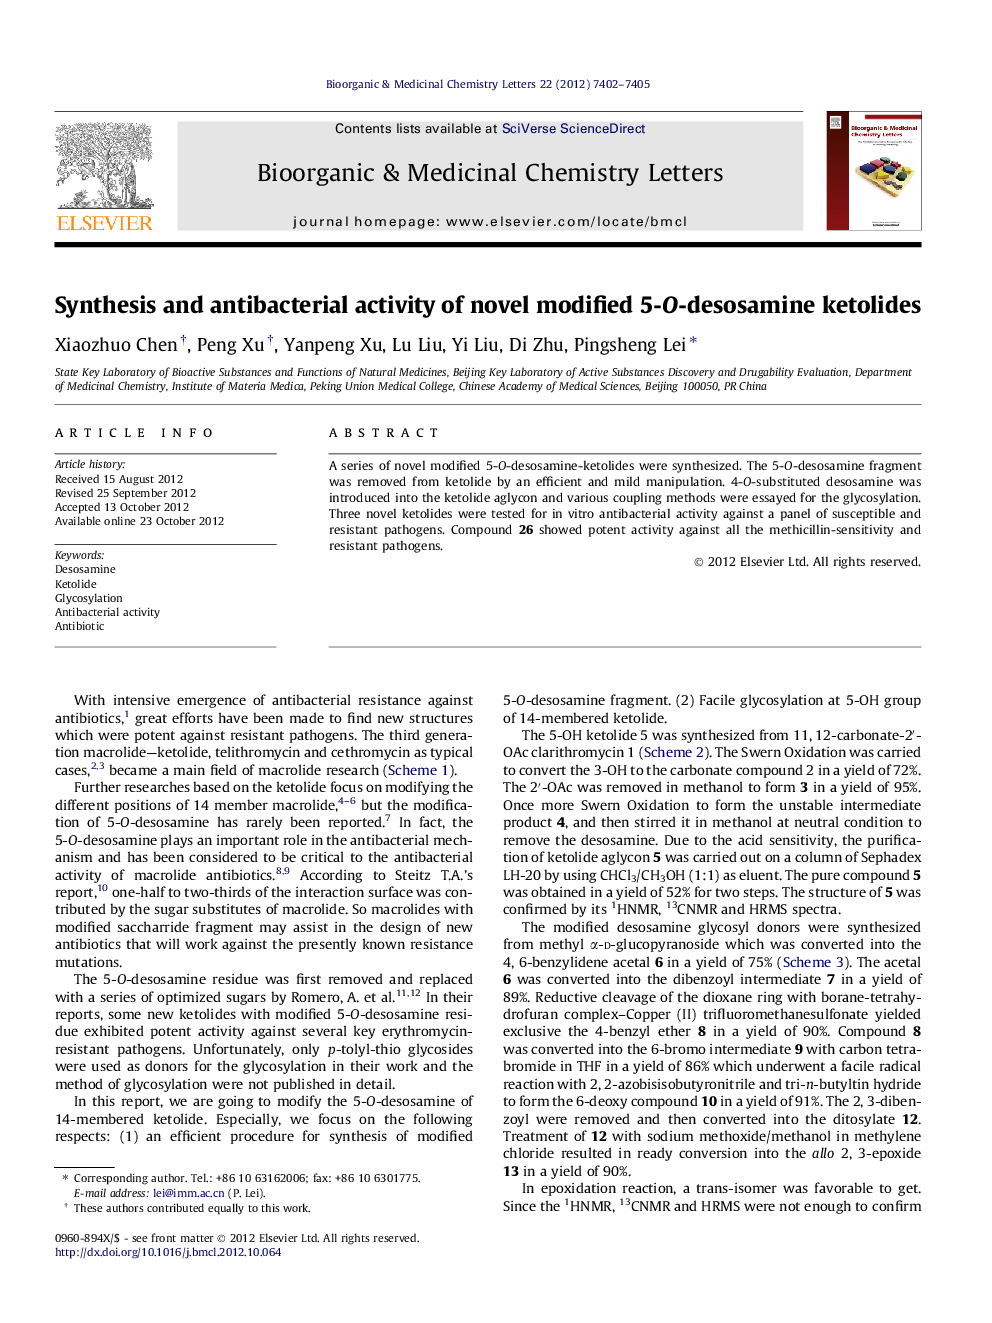 Synthesis and antibacterial activity of novel modified 5-O-desosamine ketolides